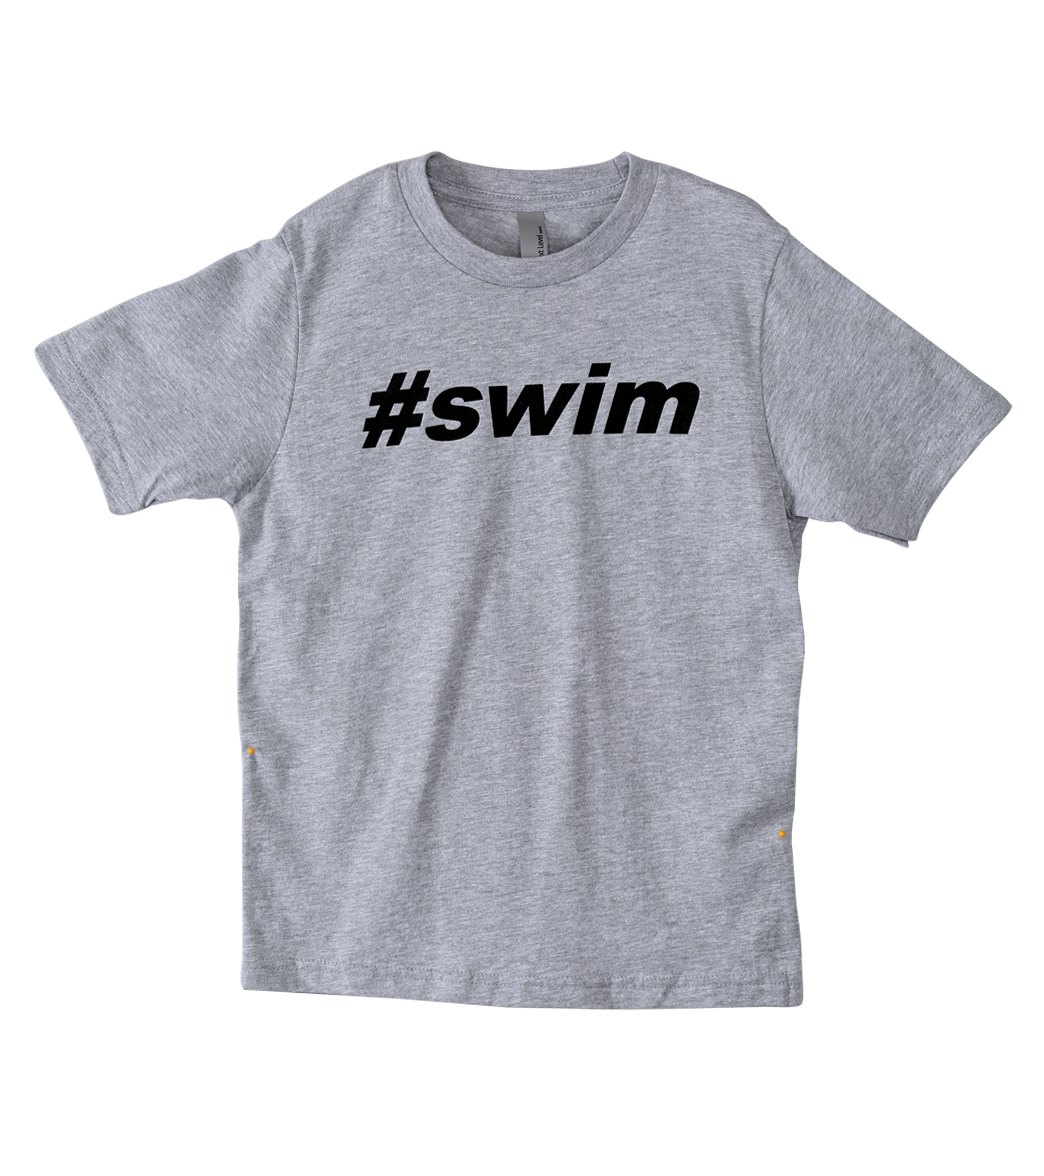 Ambro Manufacturing Boys' #swim Tee Shirt - Heather Grey Small Cotton - Swimoutlet.com